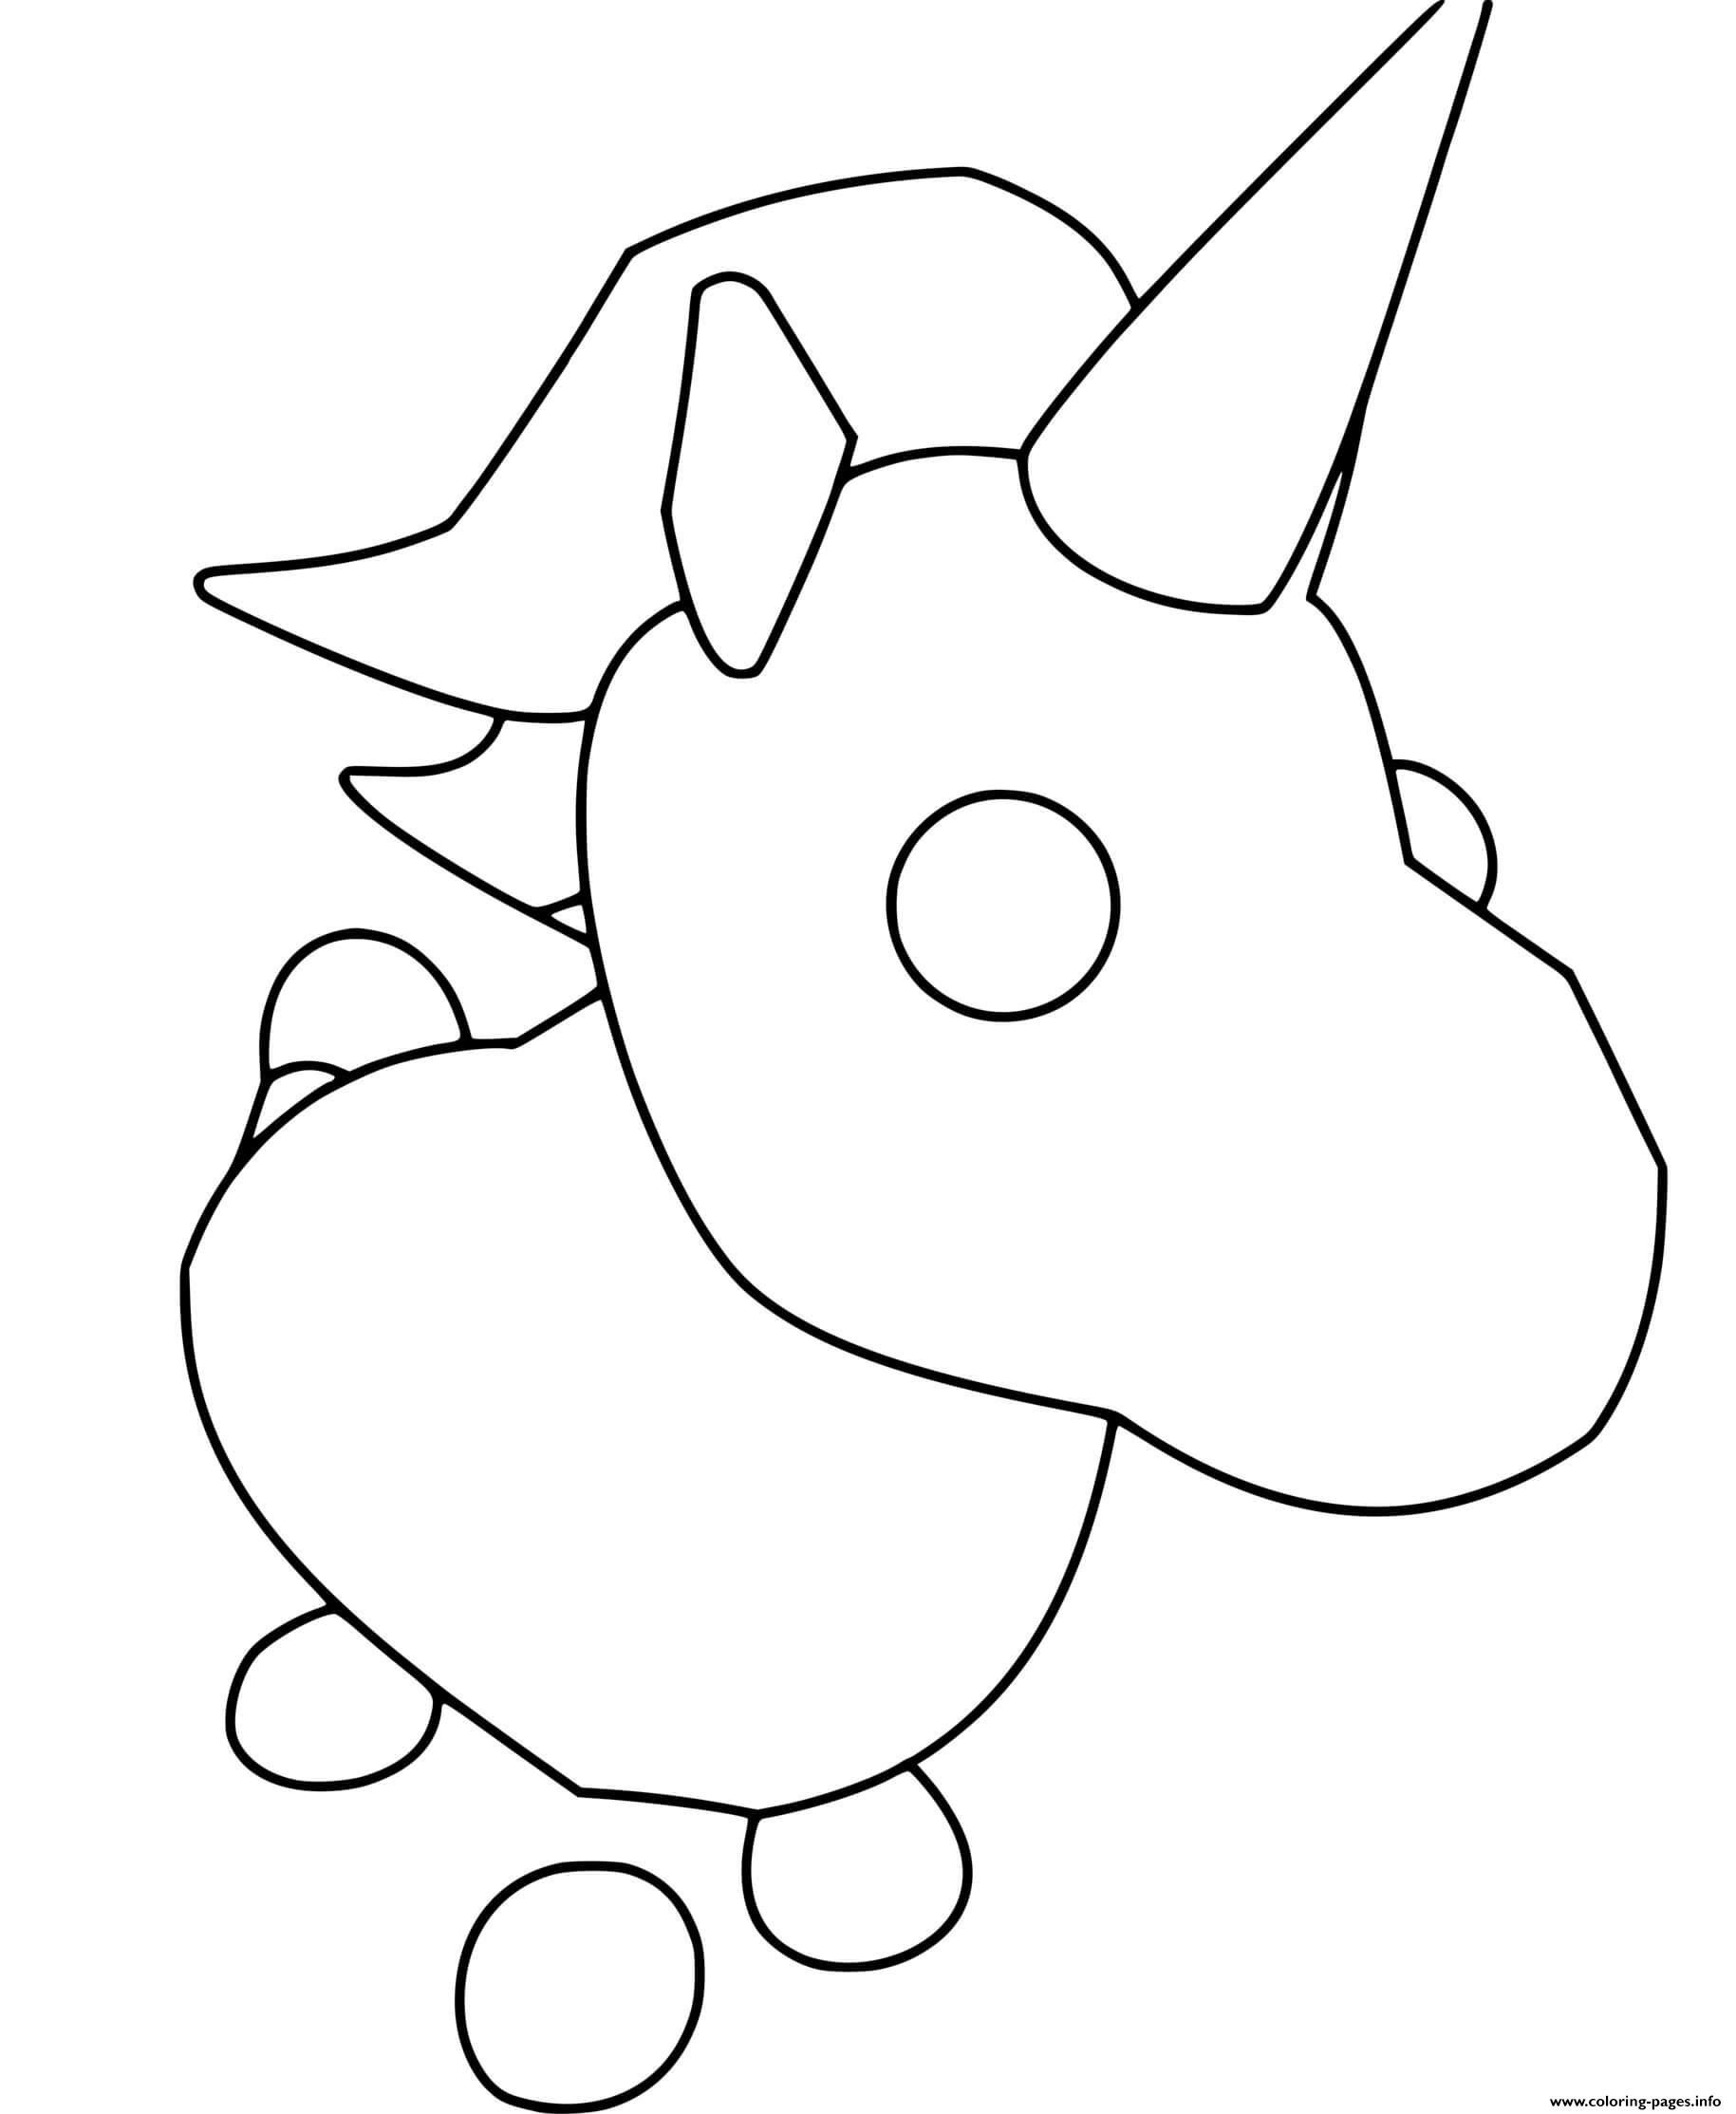 Adopt Me Unicorn Coloring page Printable